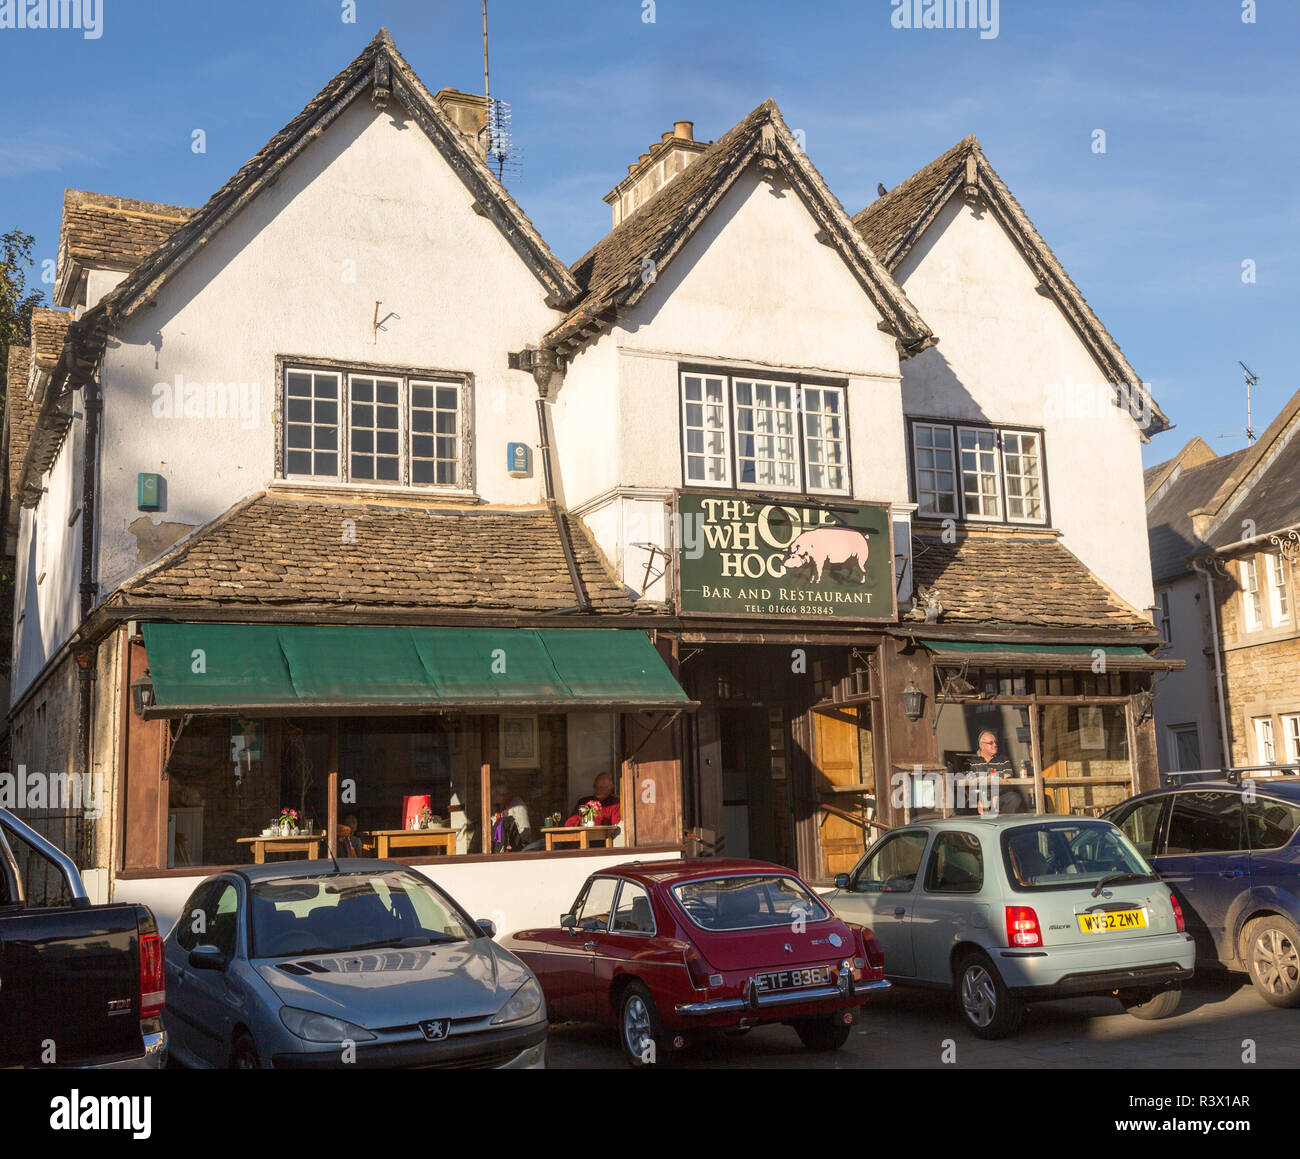 The Whole Hog bar and restaurant, Malmesbury, Wiltshire, England, UK Stock Photo